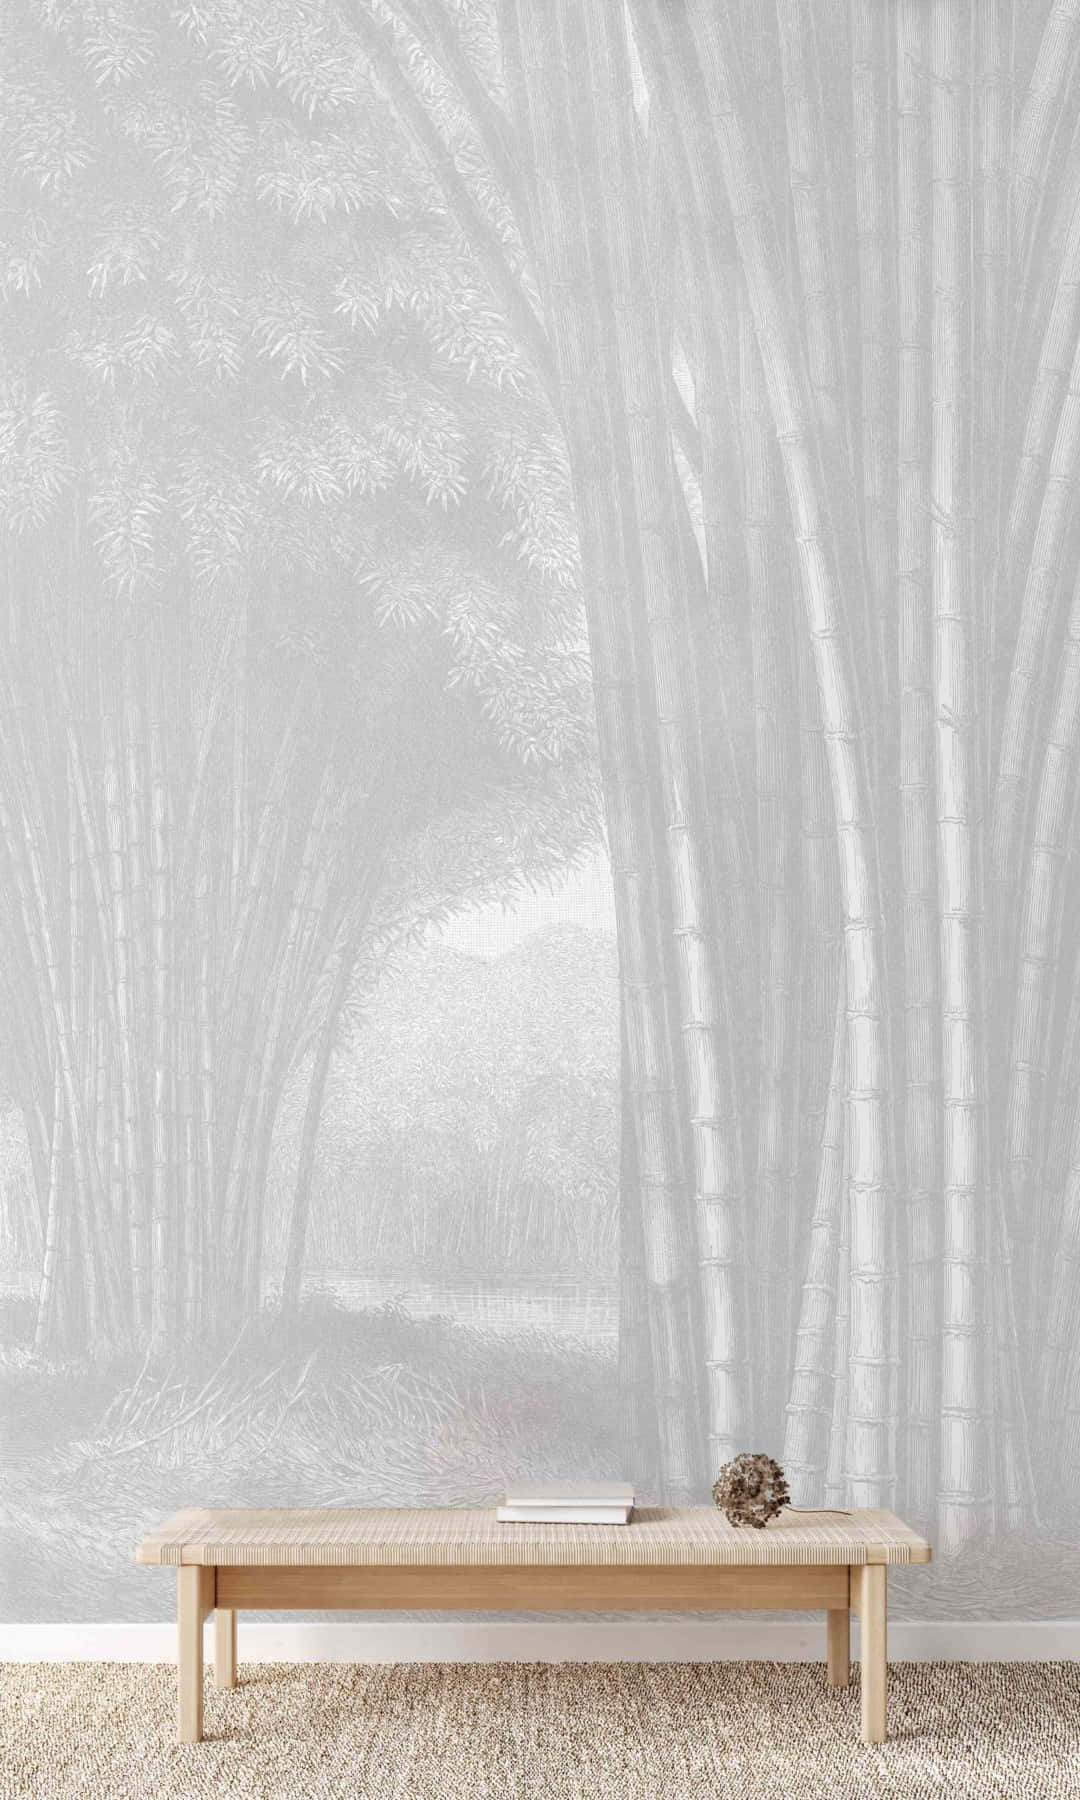 A Peaceful Stroll Through A Lush Bamboo Forest Wallpaper